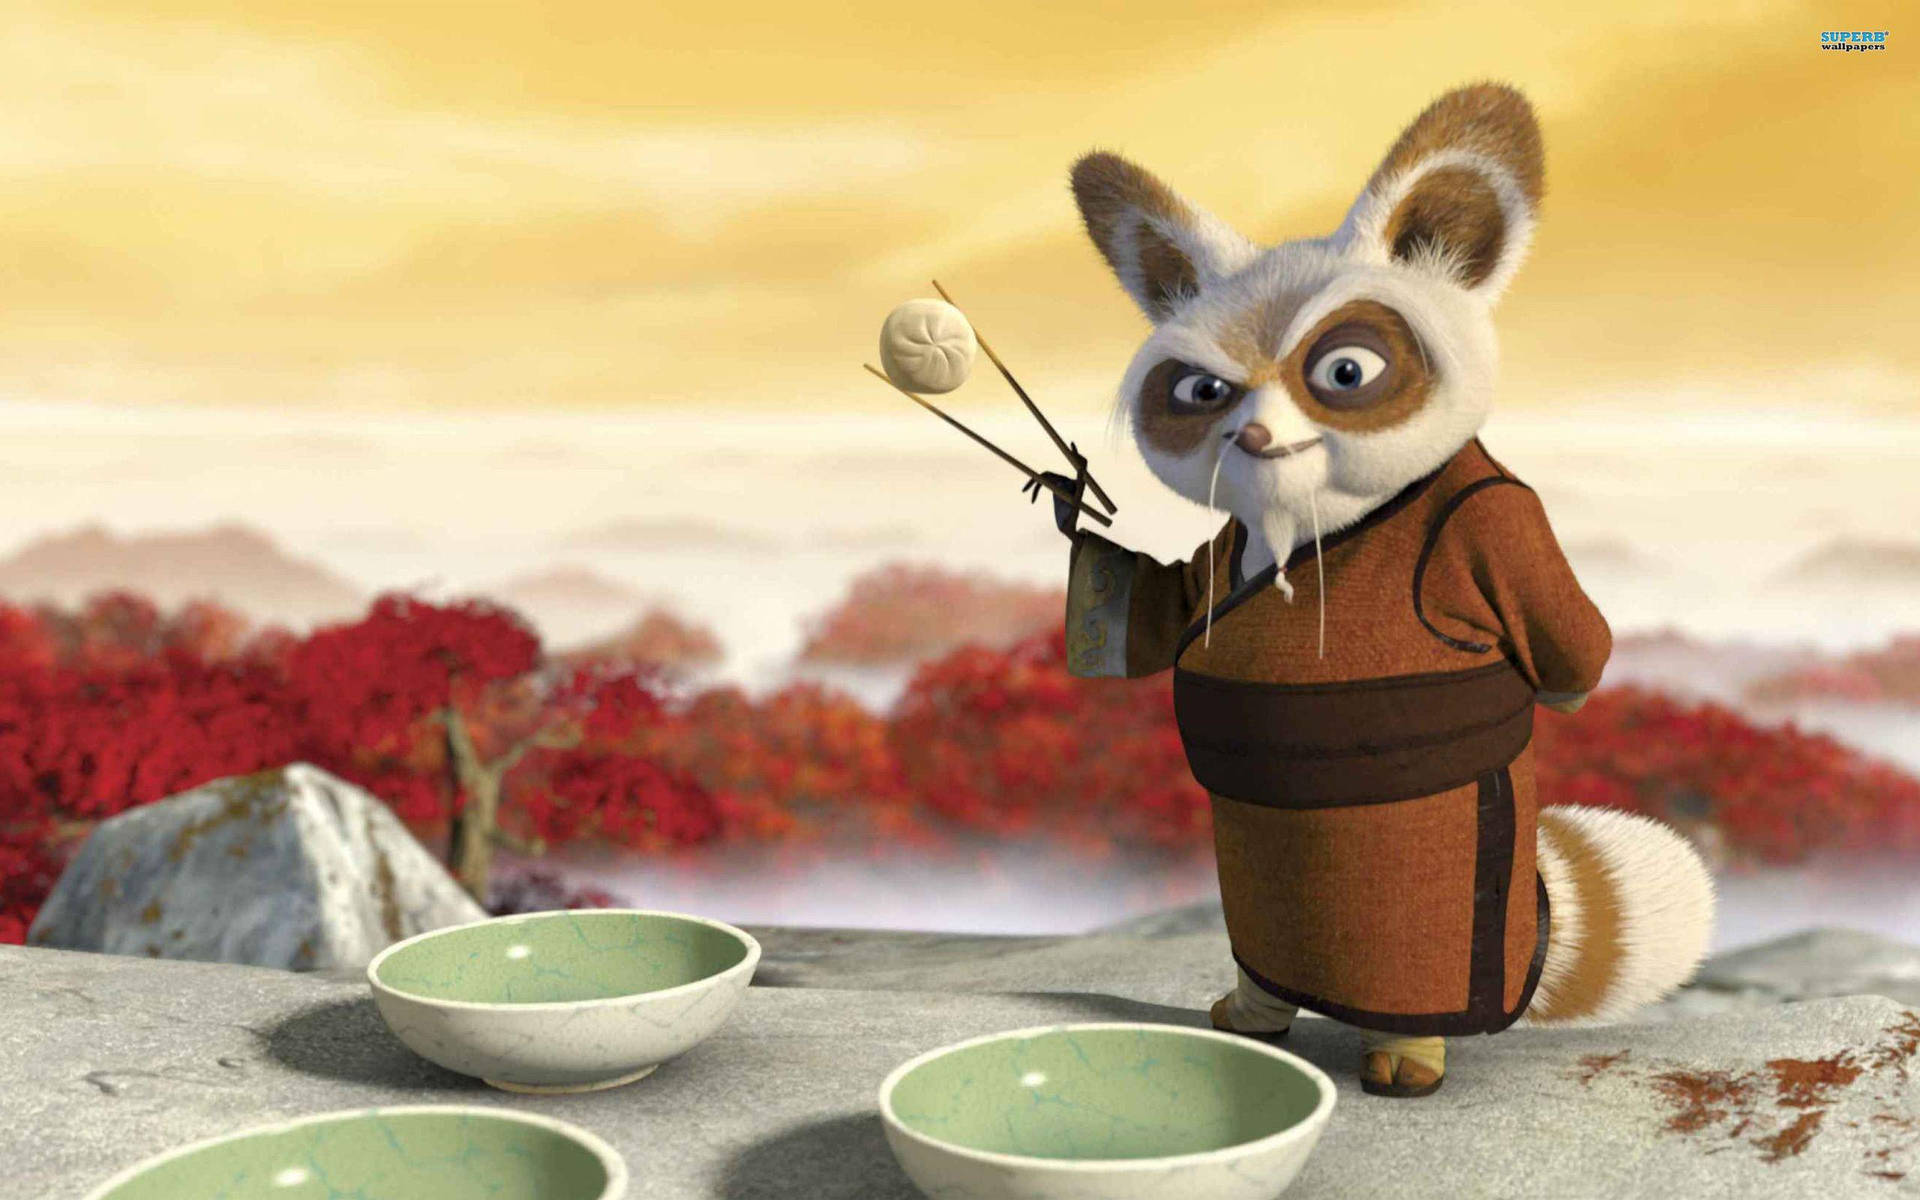 Shifu From Kung Fu Panda With Chopsticks Background